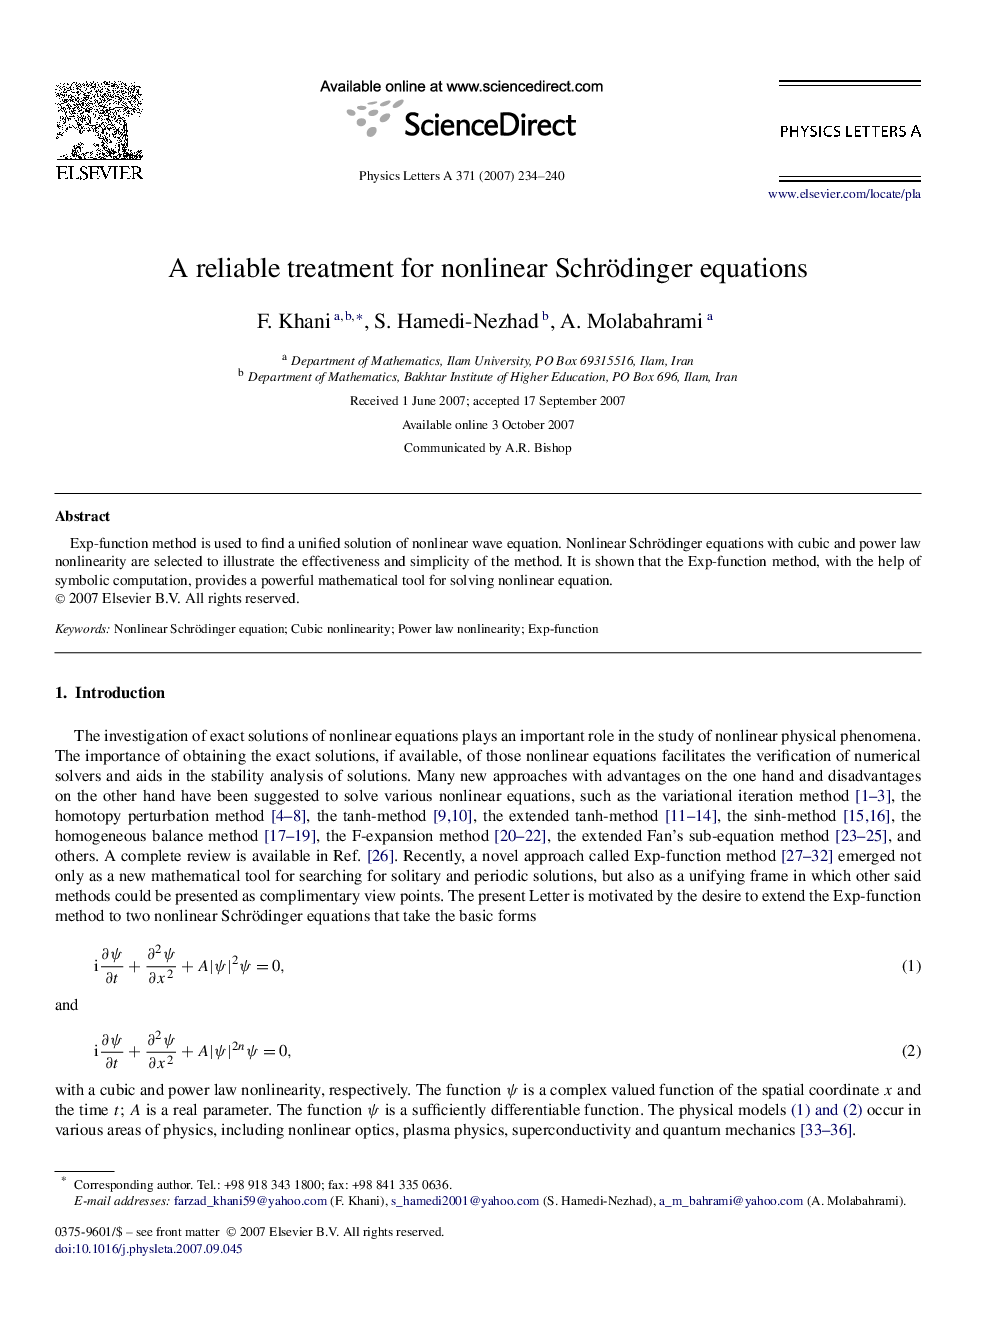 A reliable treatment for nonlinear Schrödinger equations